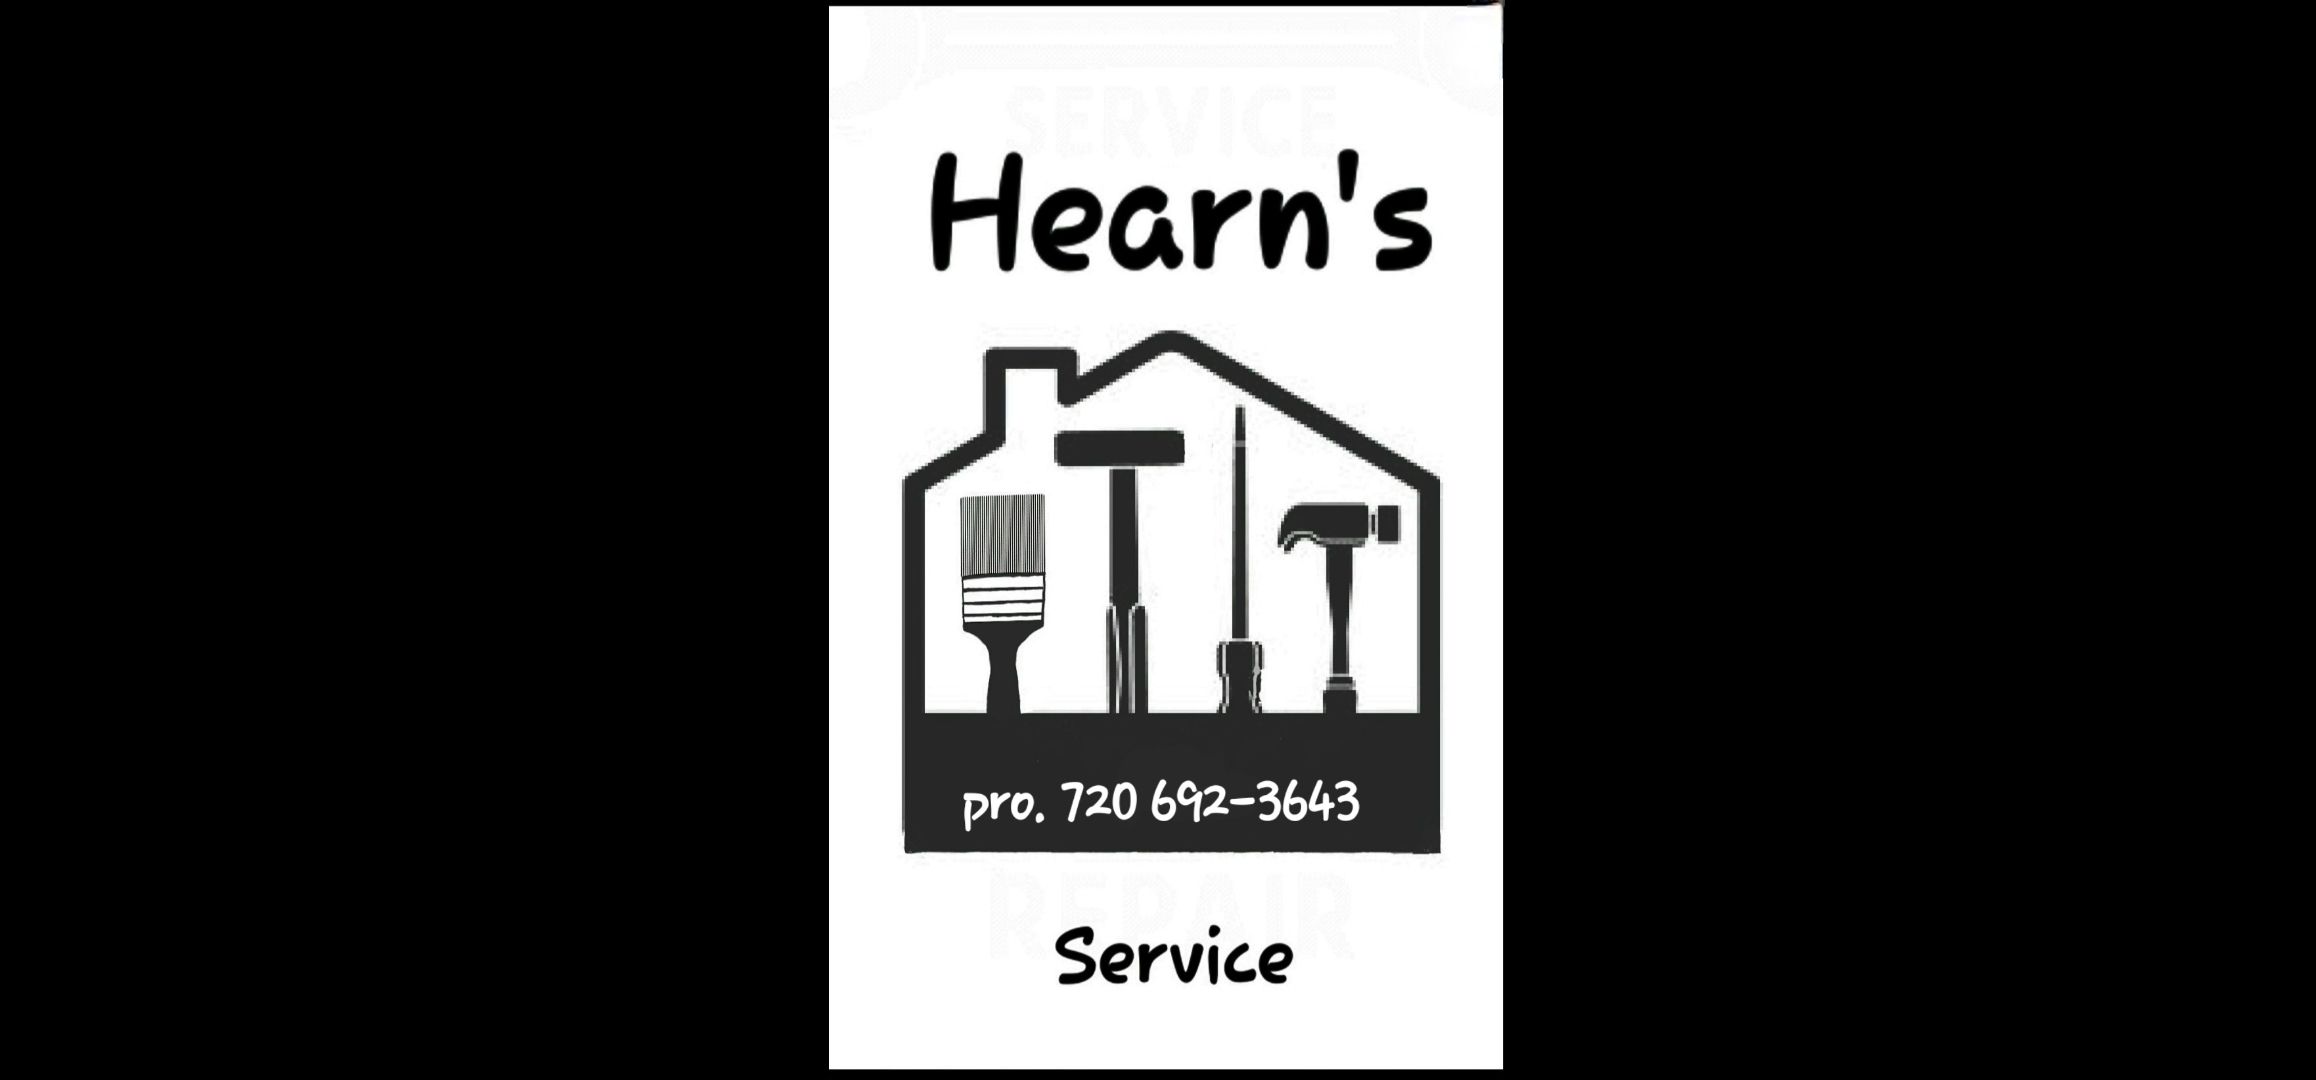 Hearn's Pro Service Logo